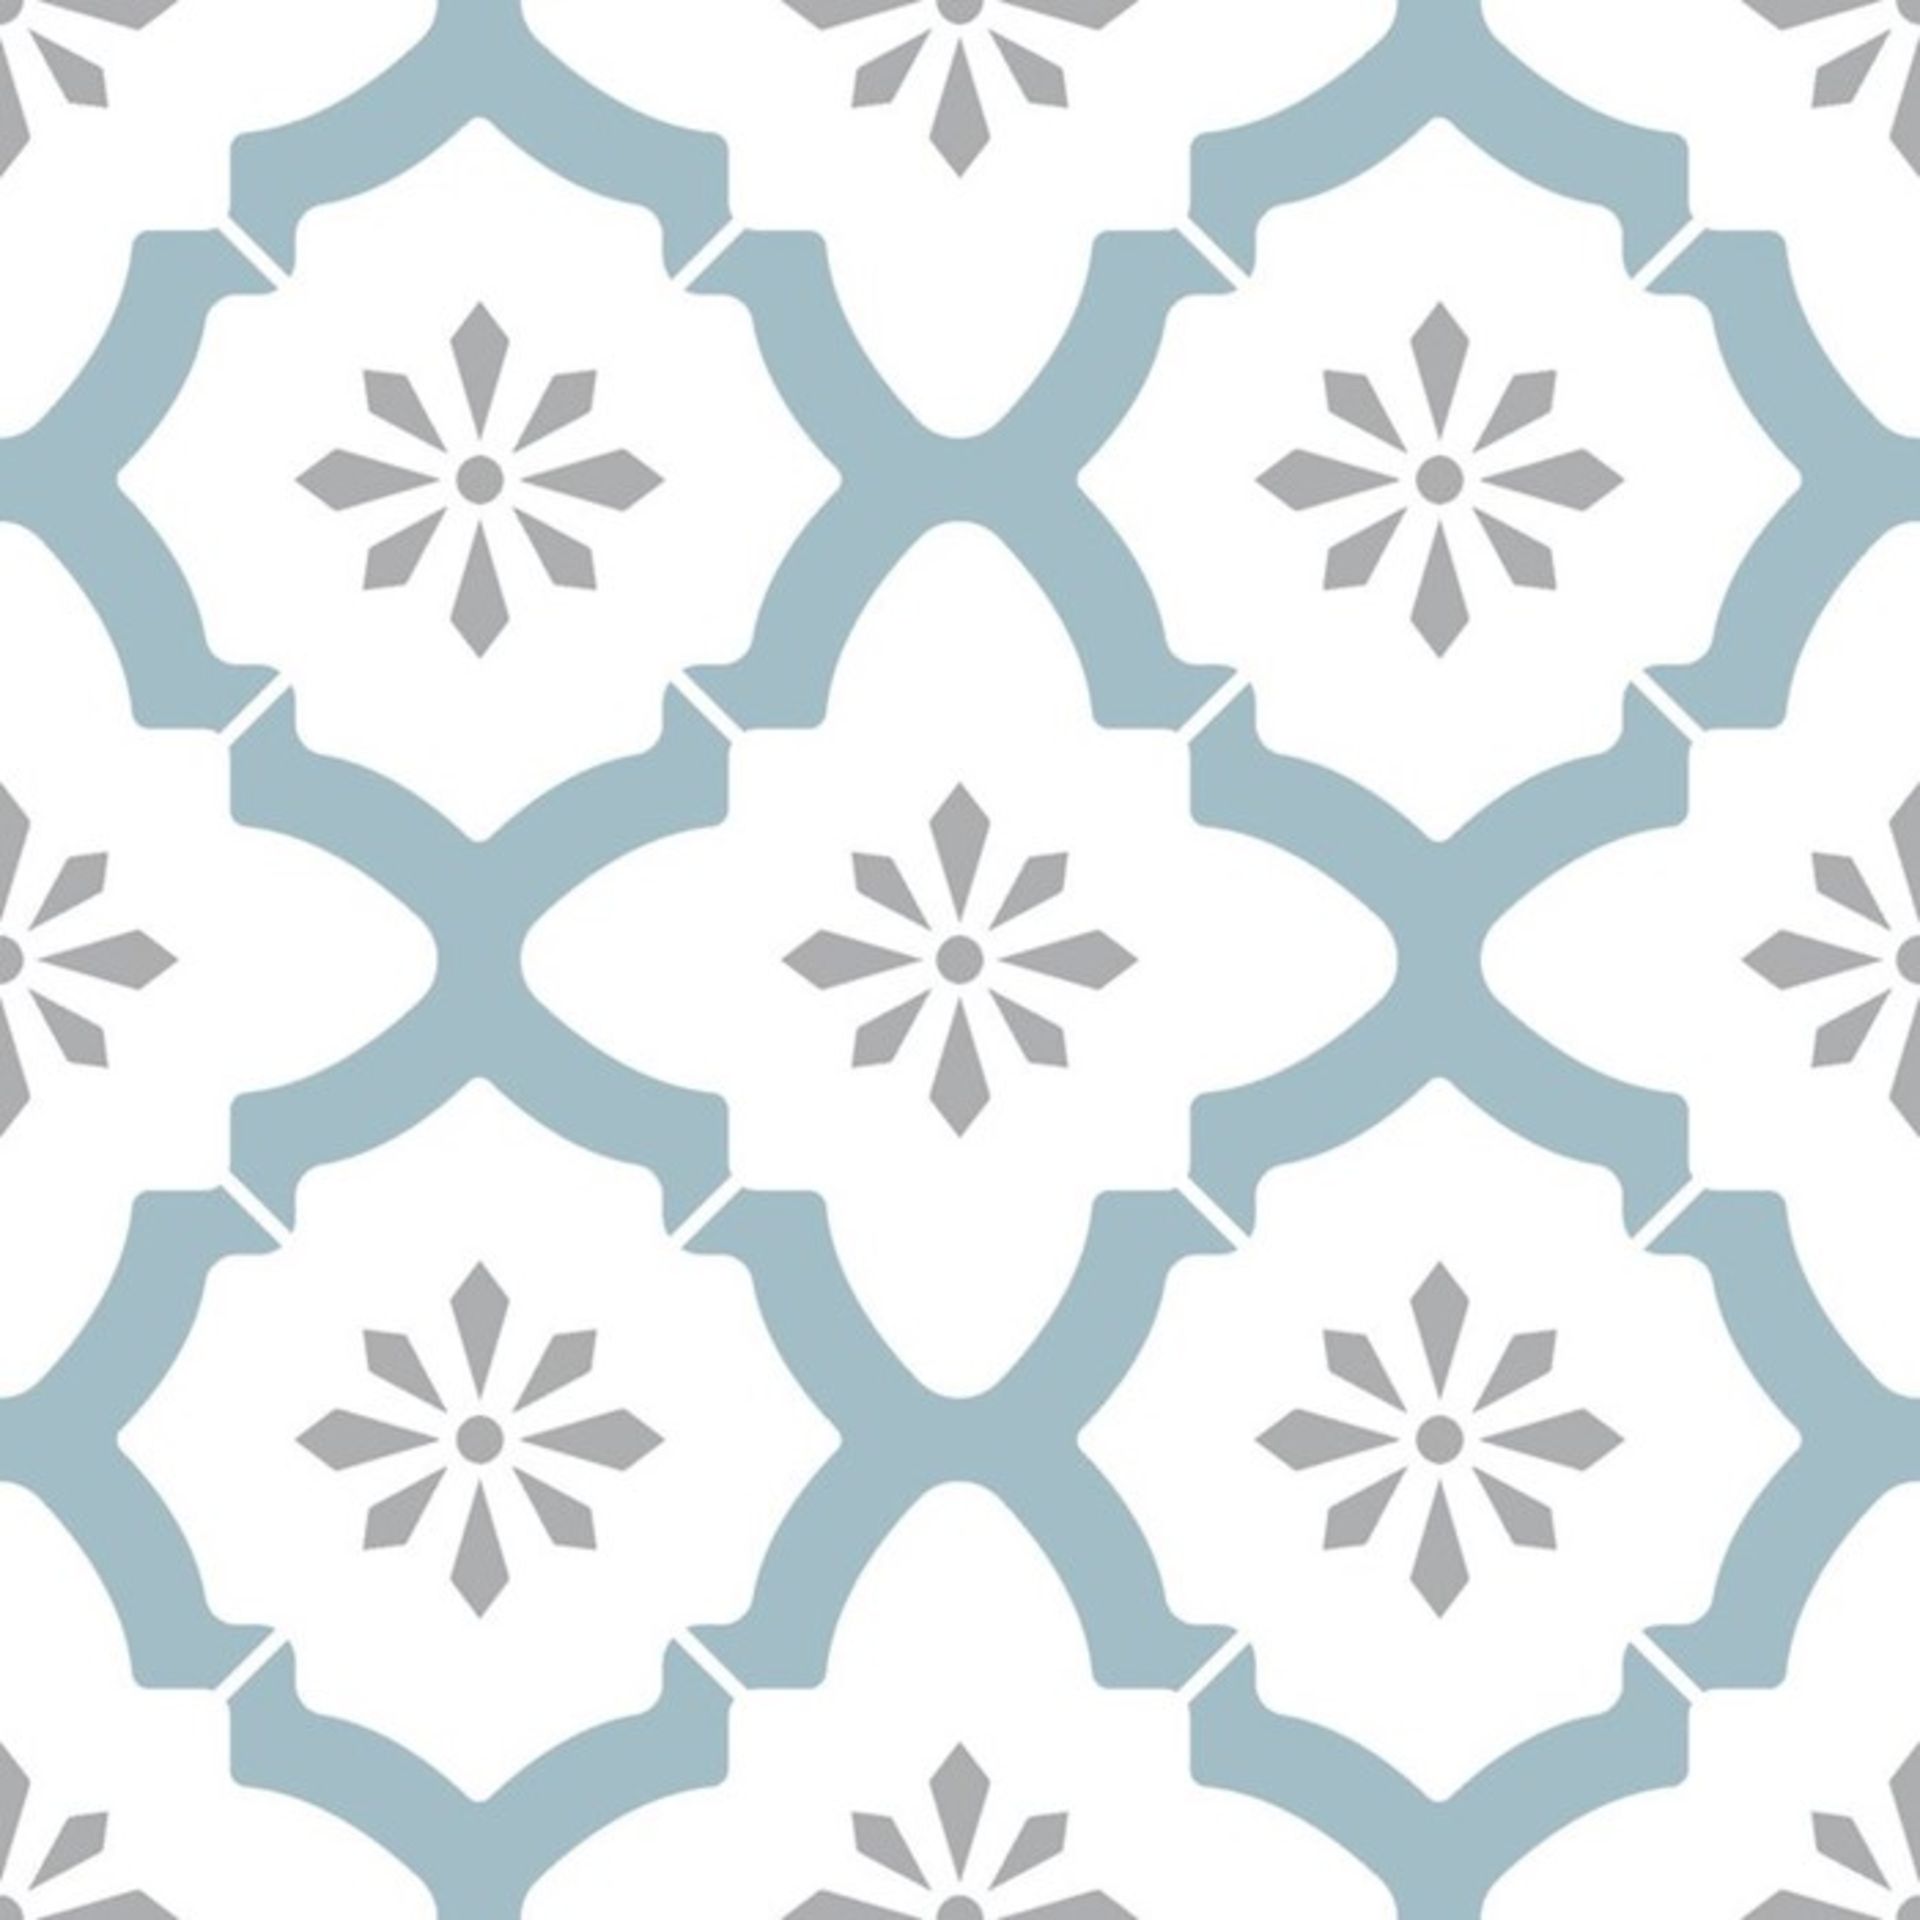 Symple Stuff Alfama 30.48 x 30.48 cm Cement Tile in Blue/White x3 (WPPS1270 - 14794/22) - (